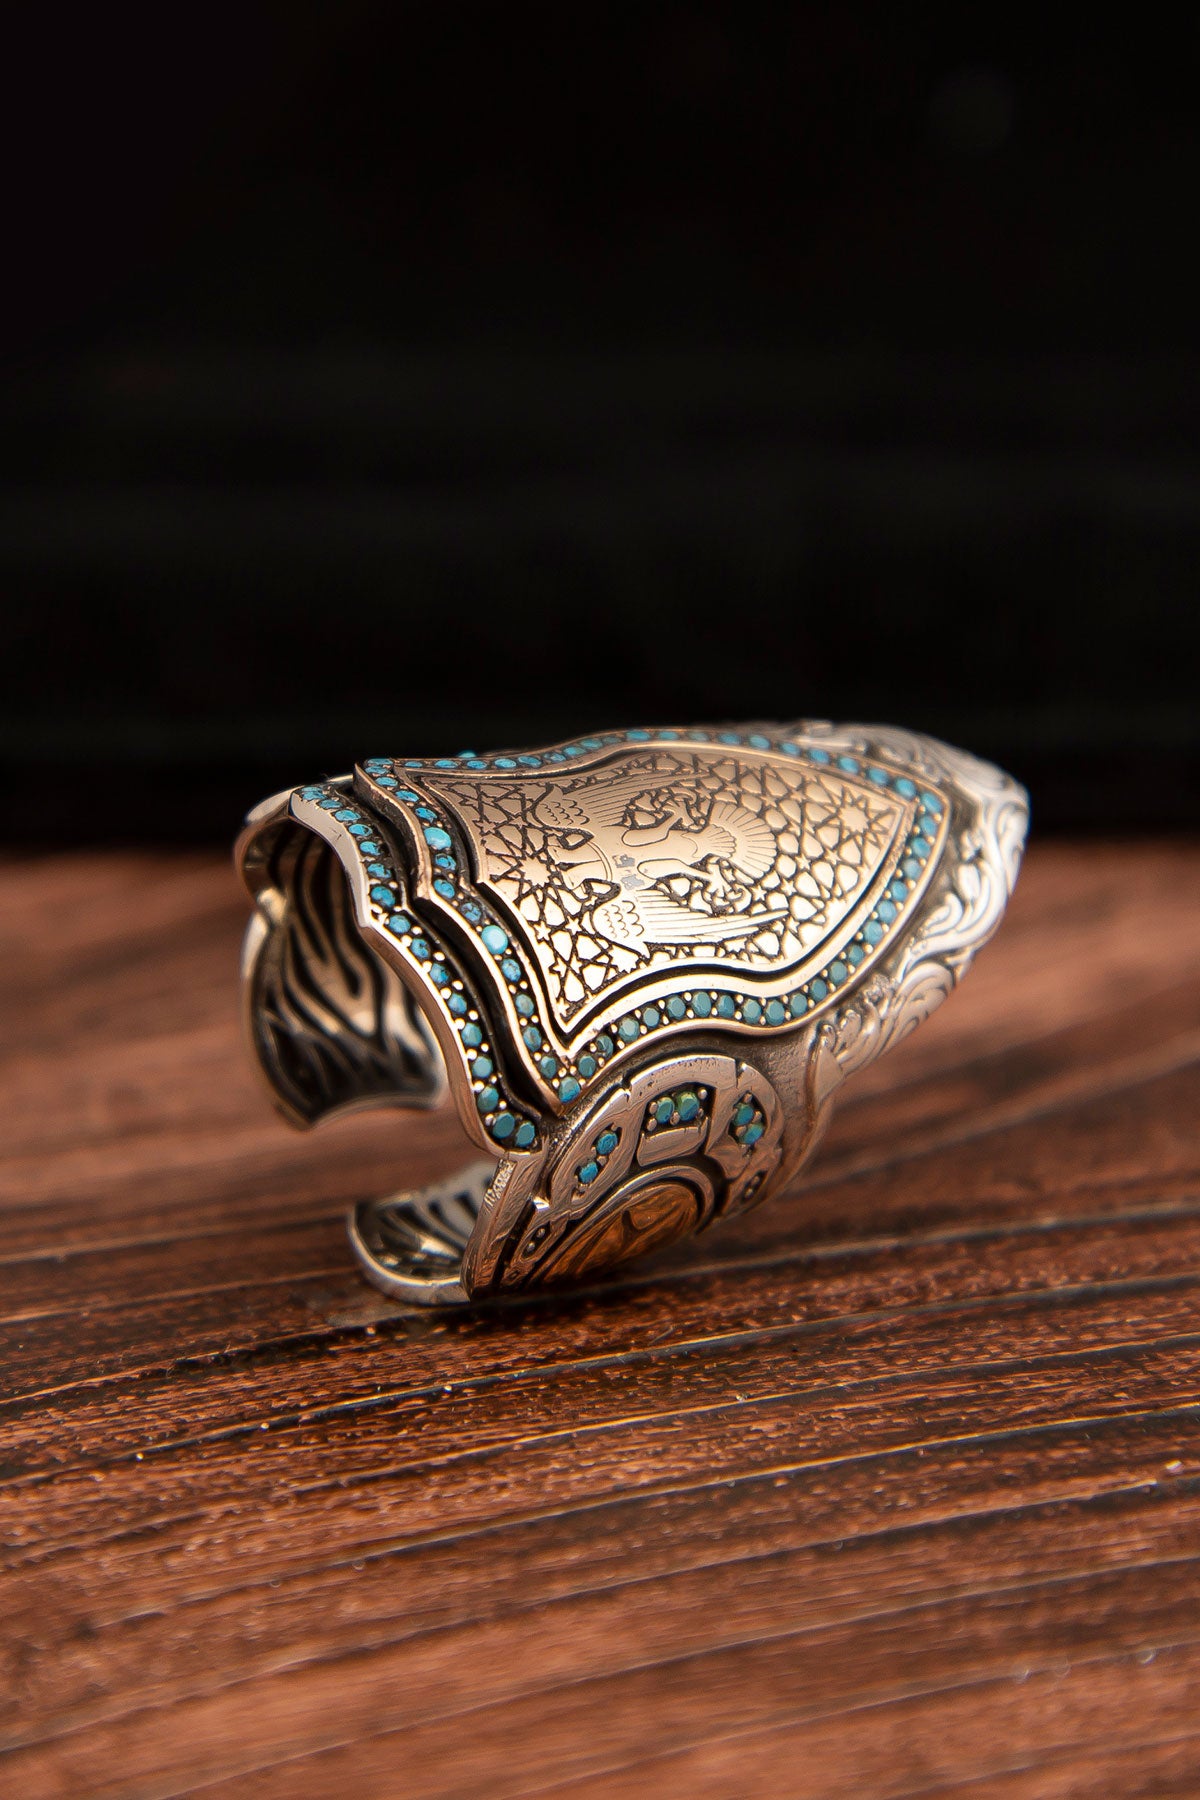 Zihgir Model Silver Men's Ring